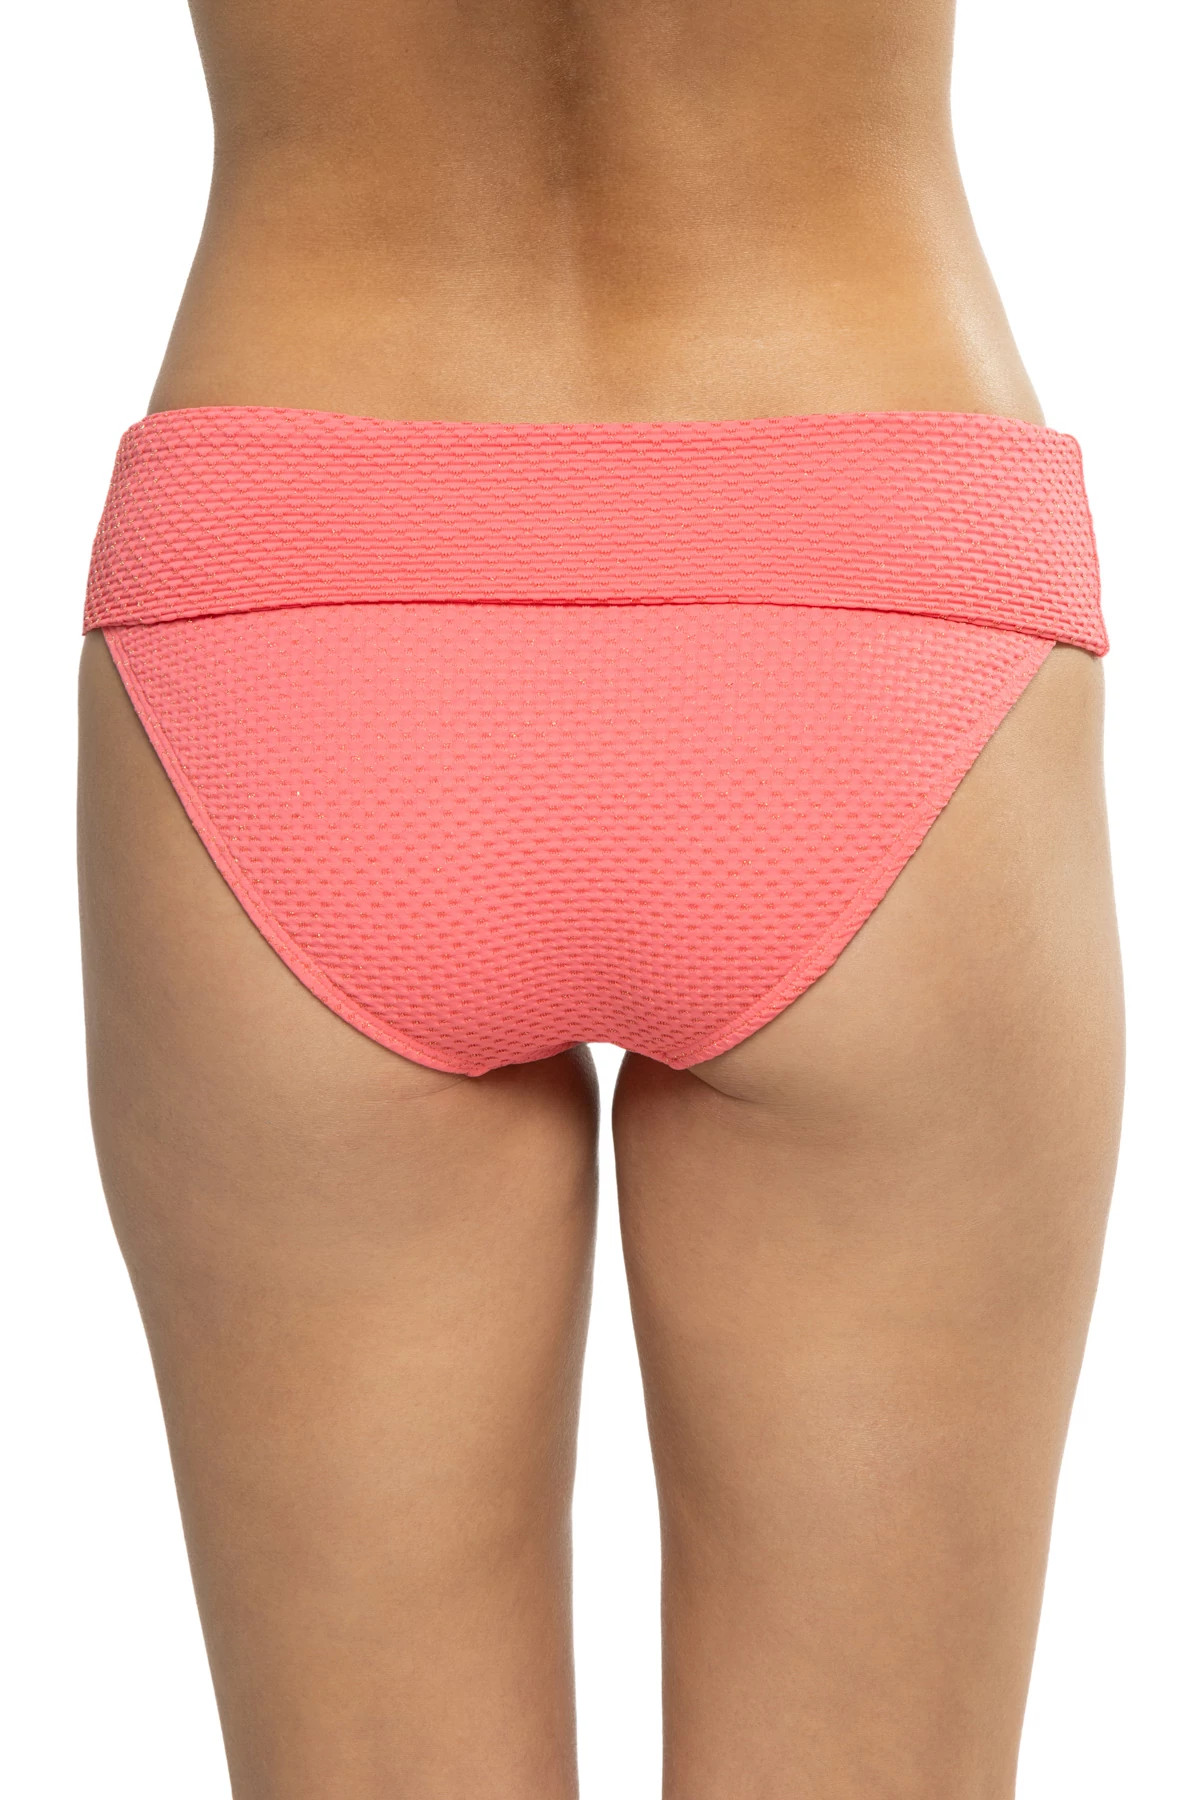 CORAL Sydney Textured Hipster Bikini Bottom image number 3